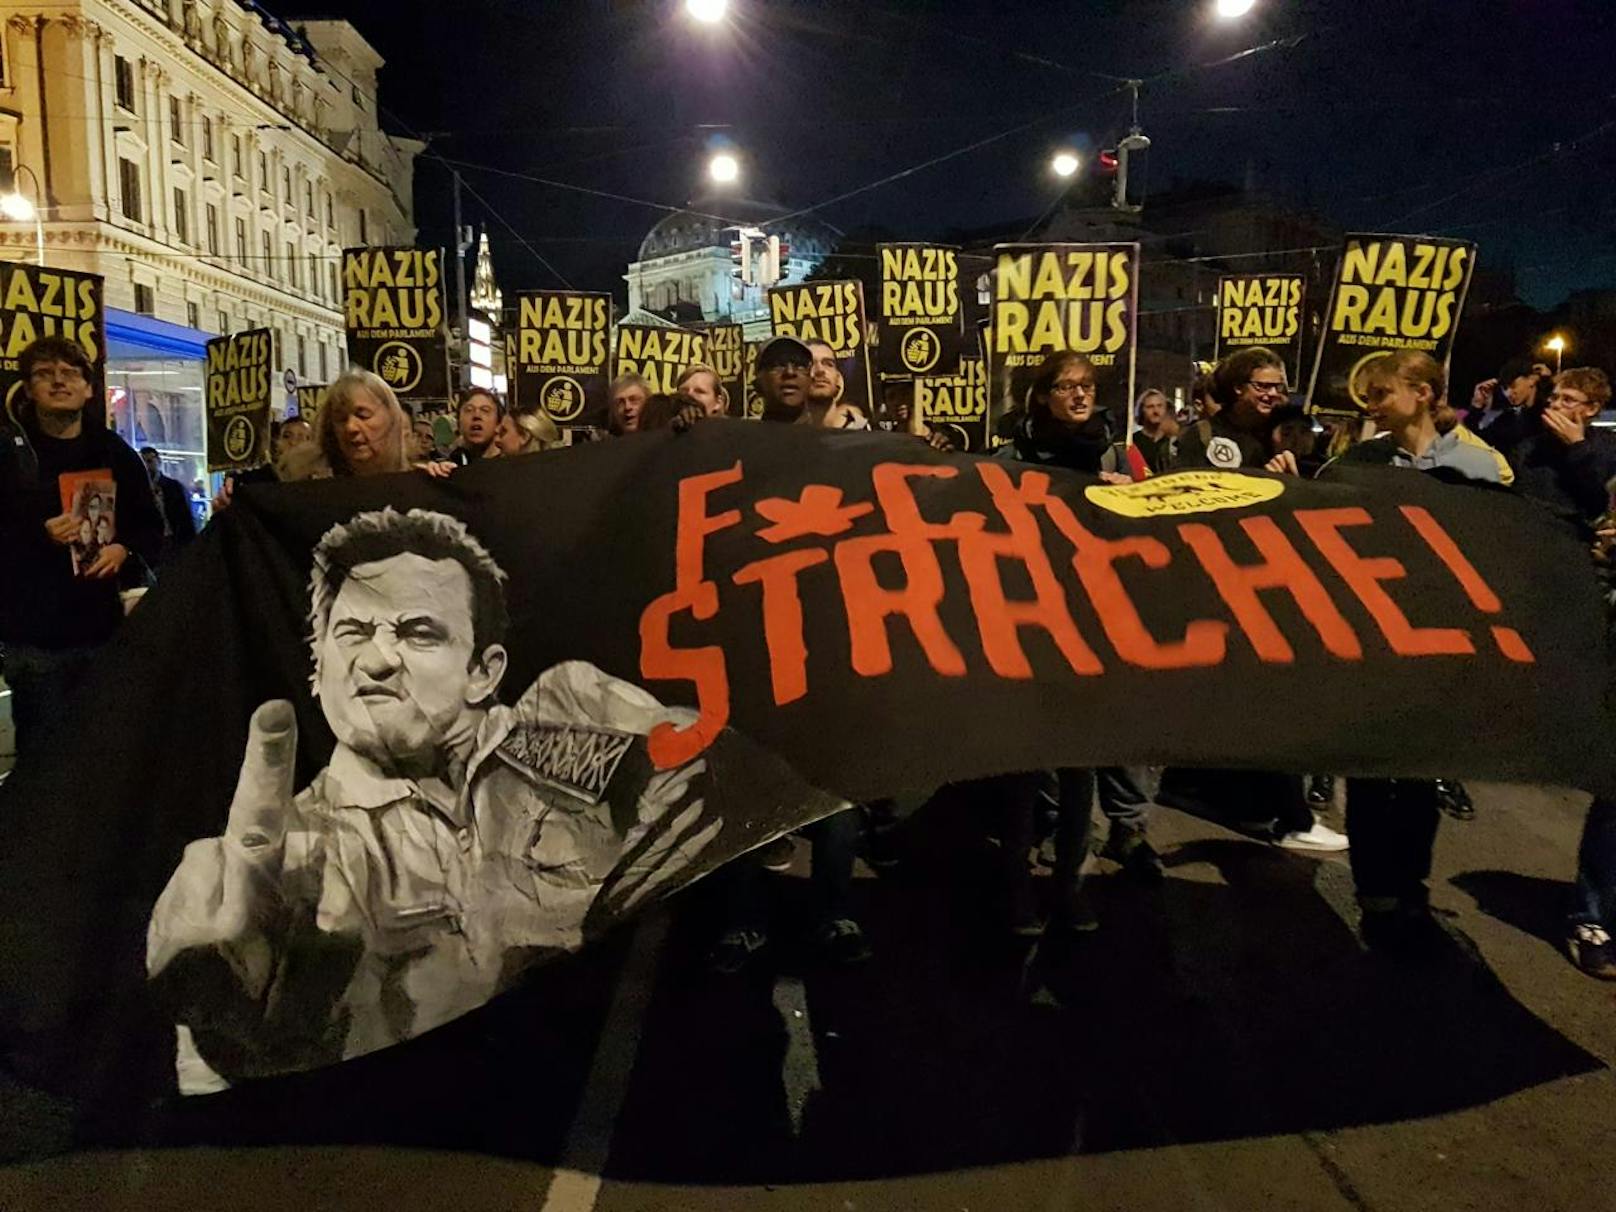 Knapp 300 Teilnehmer nahmen an der "F*CK Strache"-Demo teil